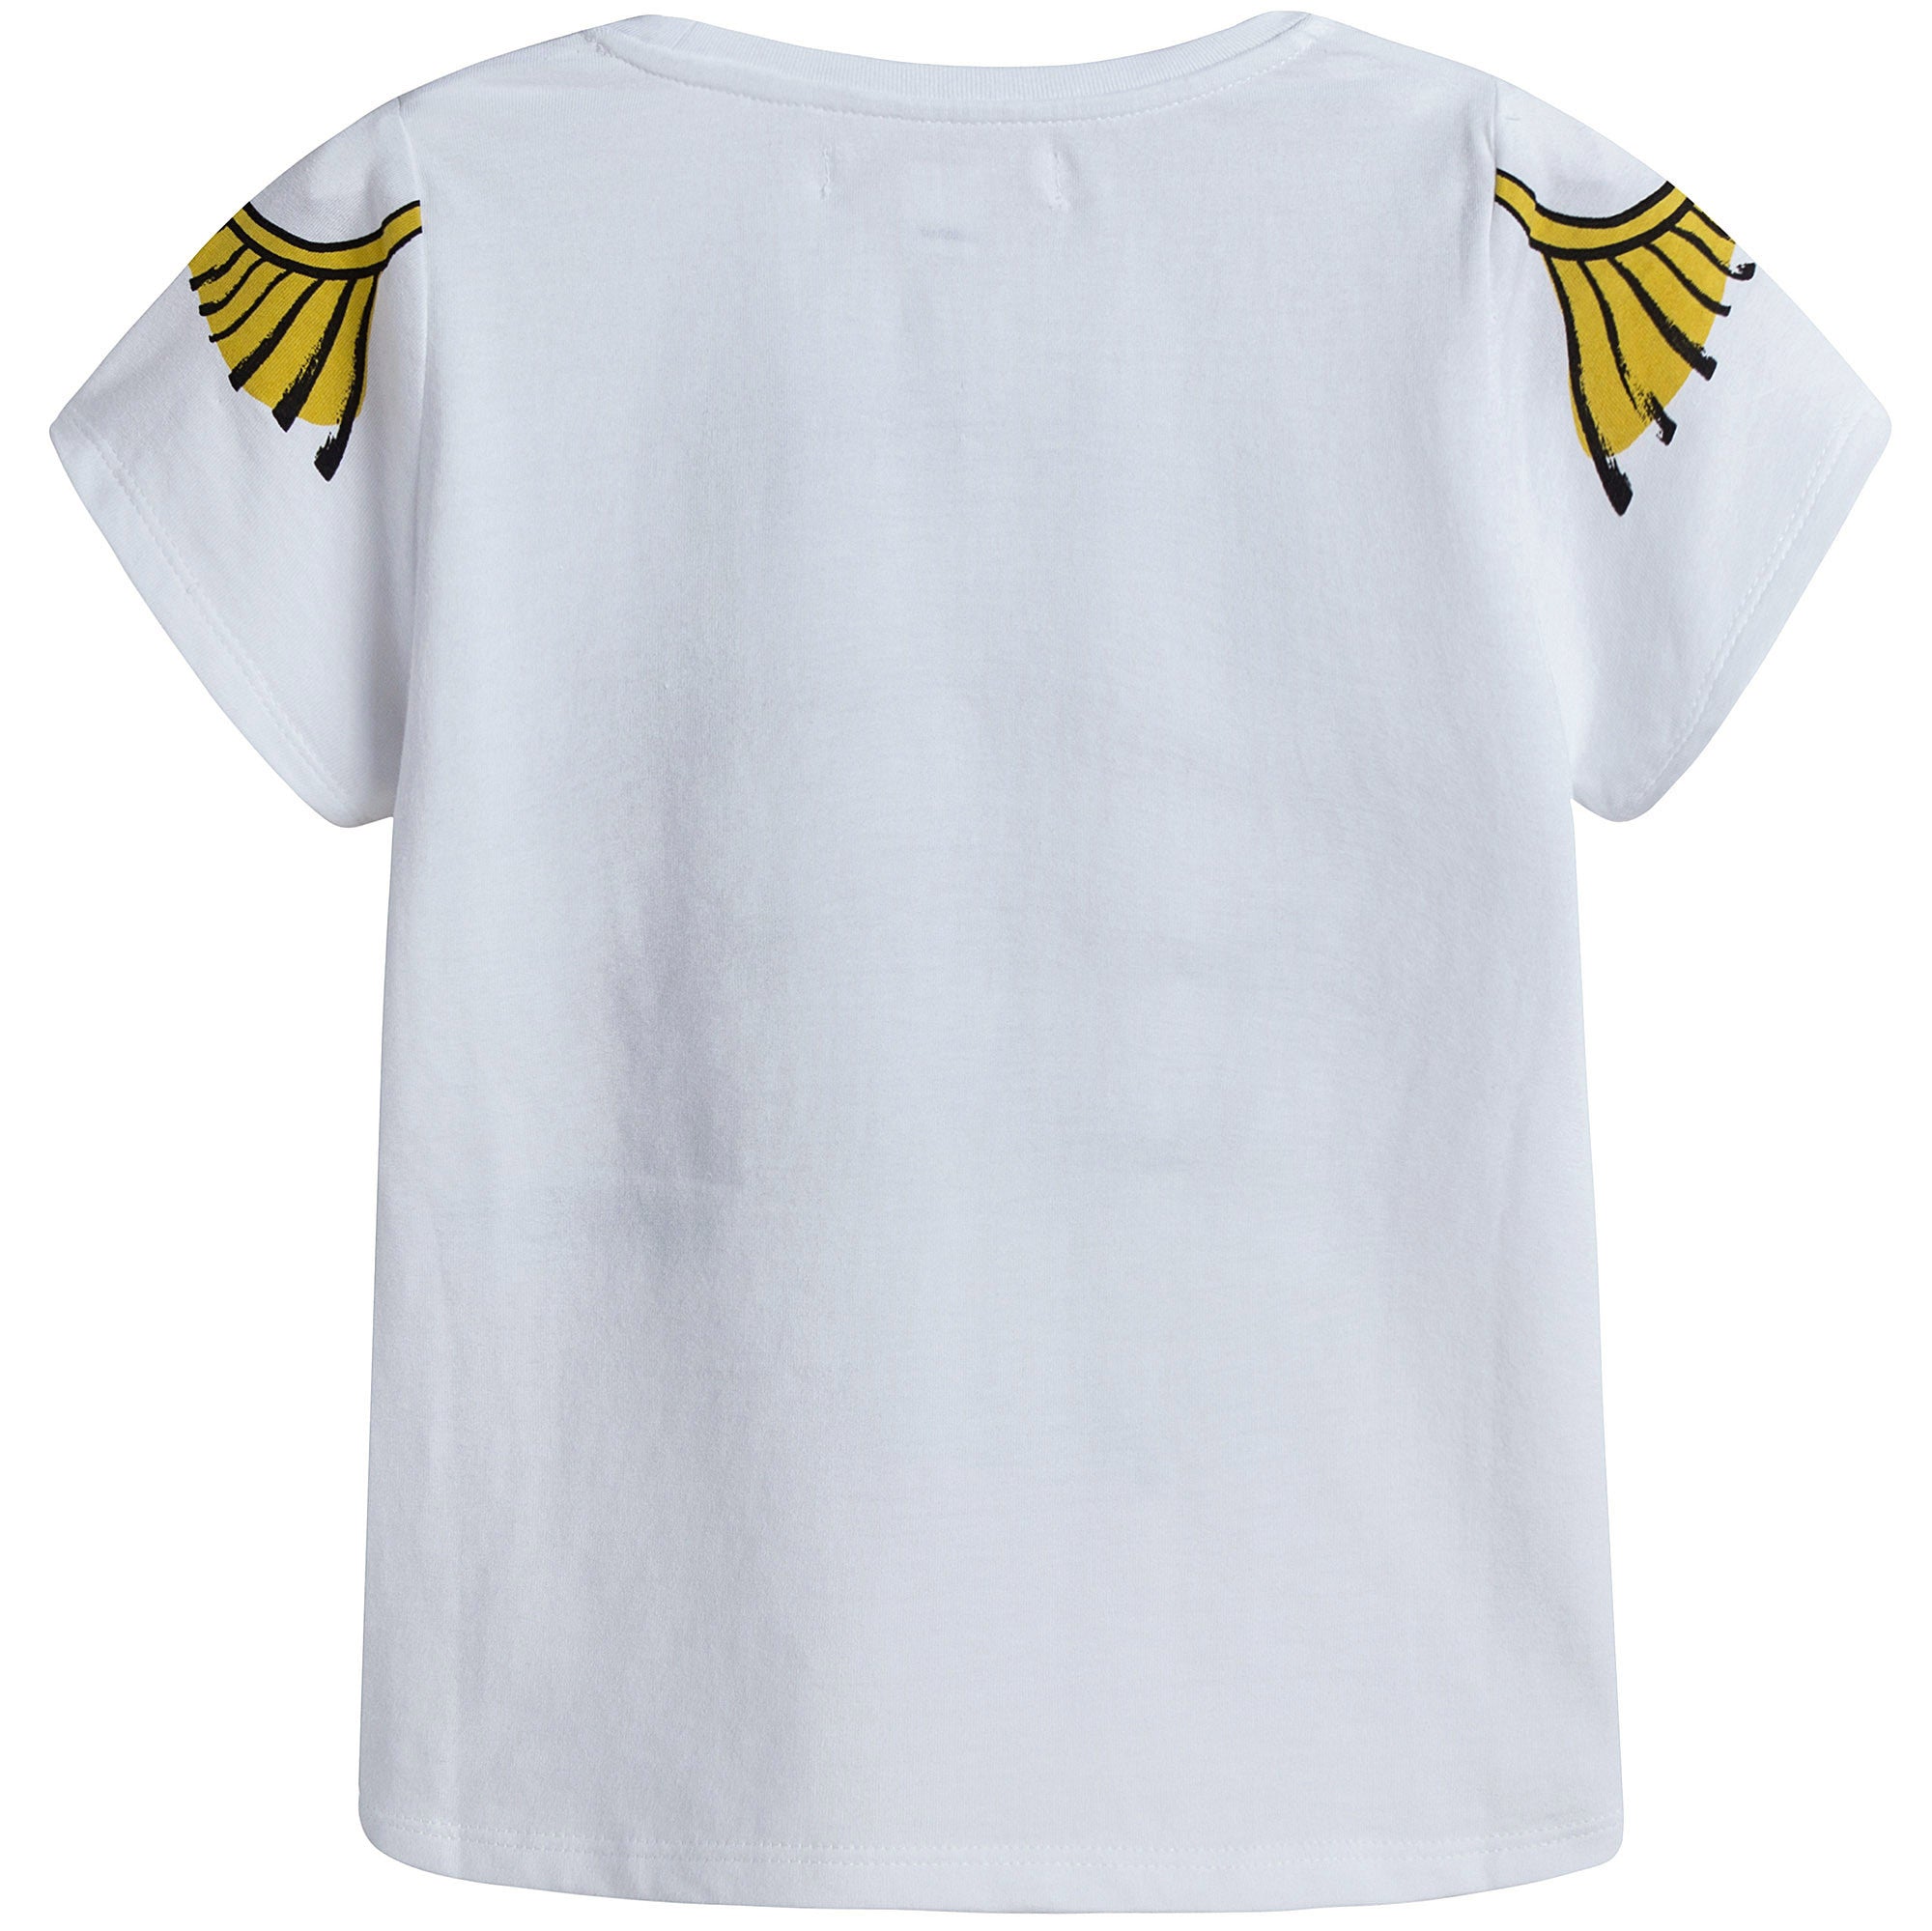 Girls White Band Practice T-Shirt - CÉMAROSE | Children's Fashion Store - 2